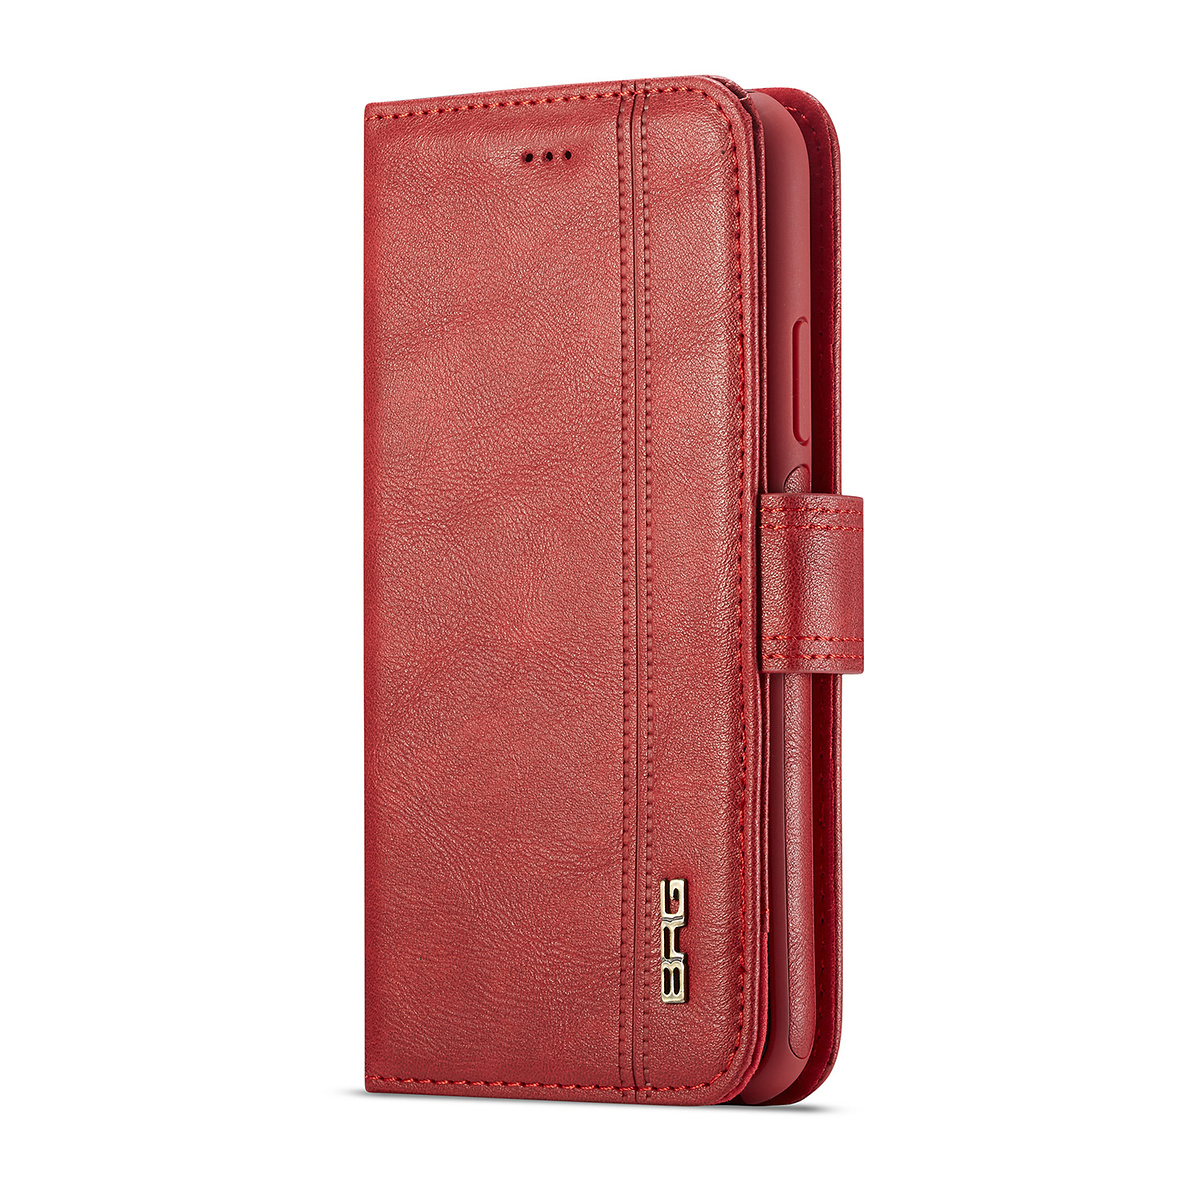 BRG Luxury plånboksfodral med ställ, iPhone 11 Pro, röd